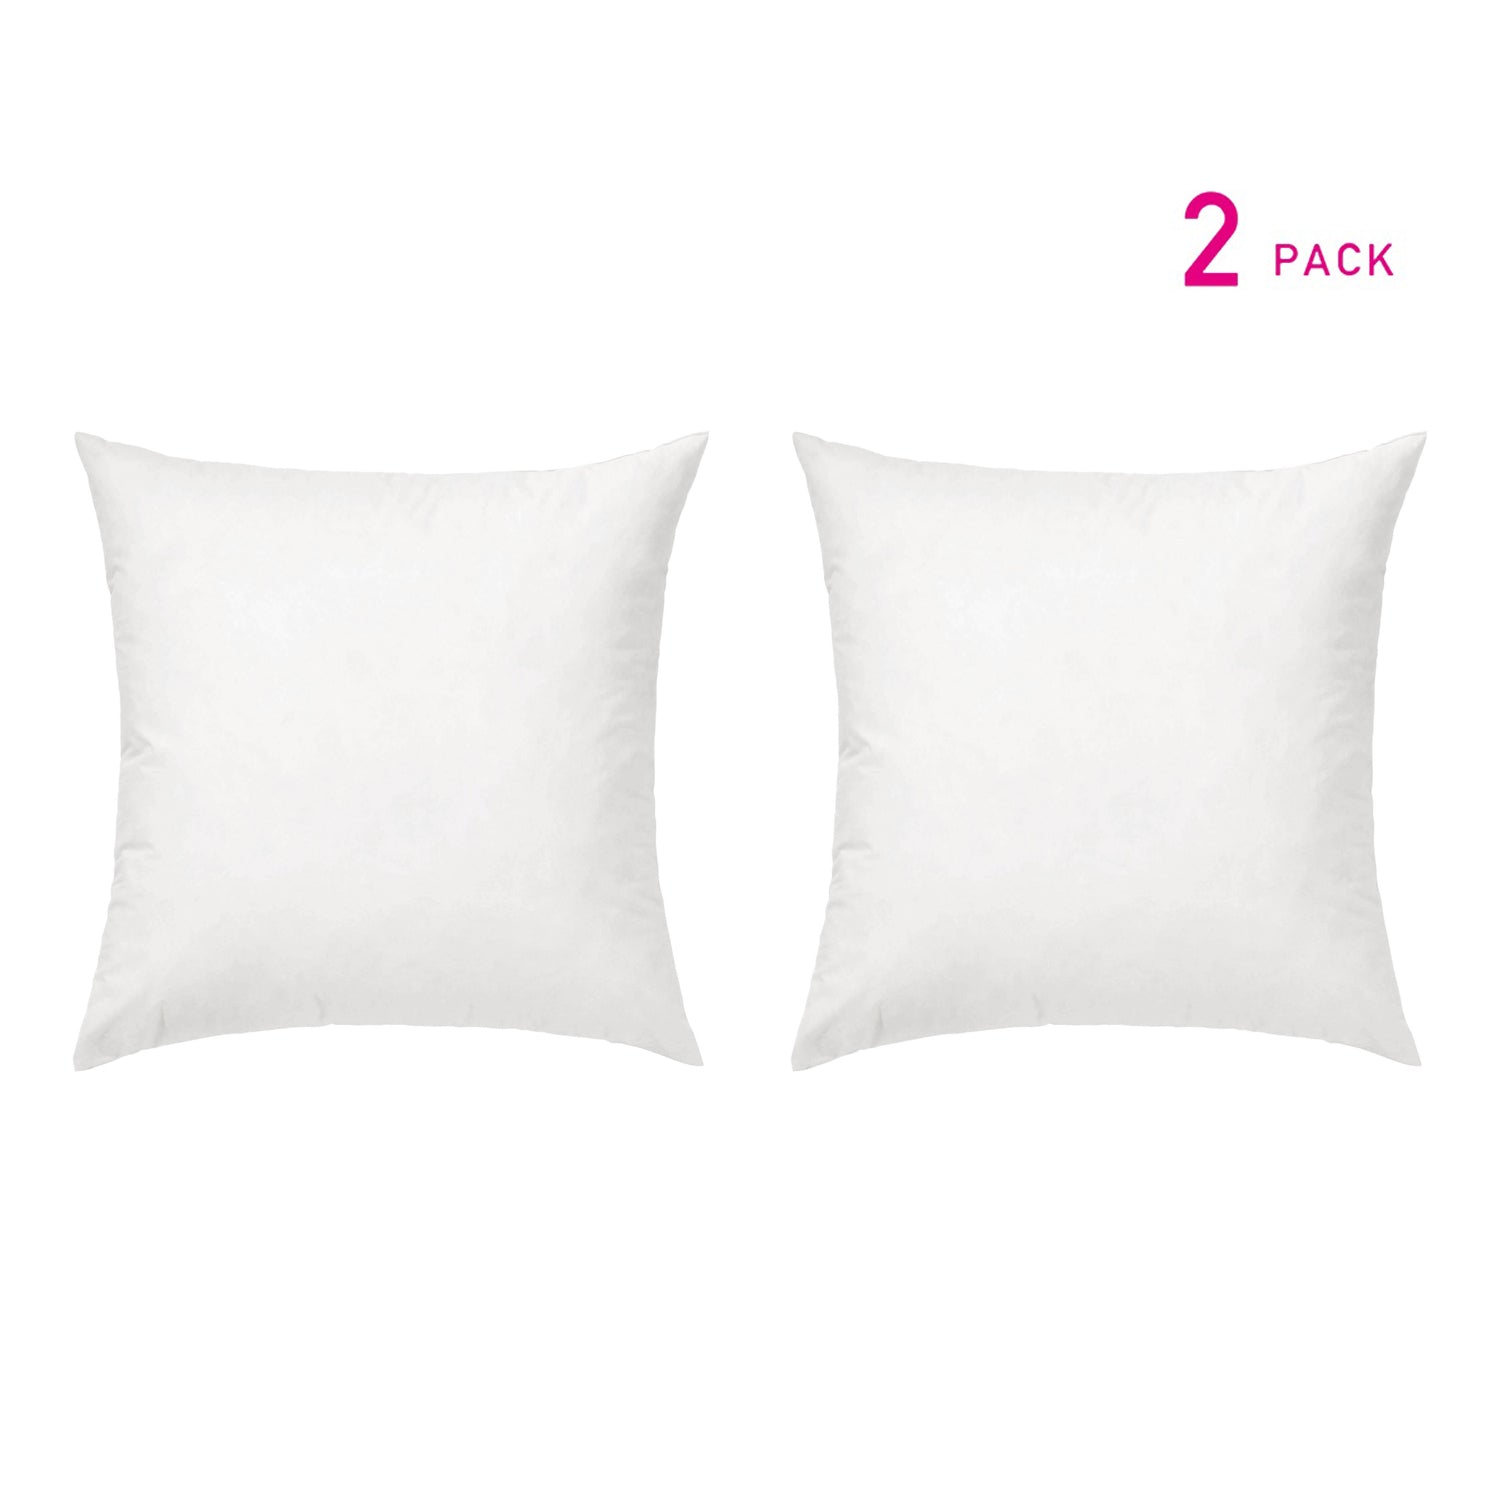 Pillow Insert 18x18 Inch Square Sham Stuffer Premium Pillow Forms